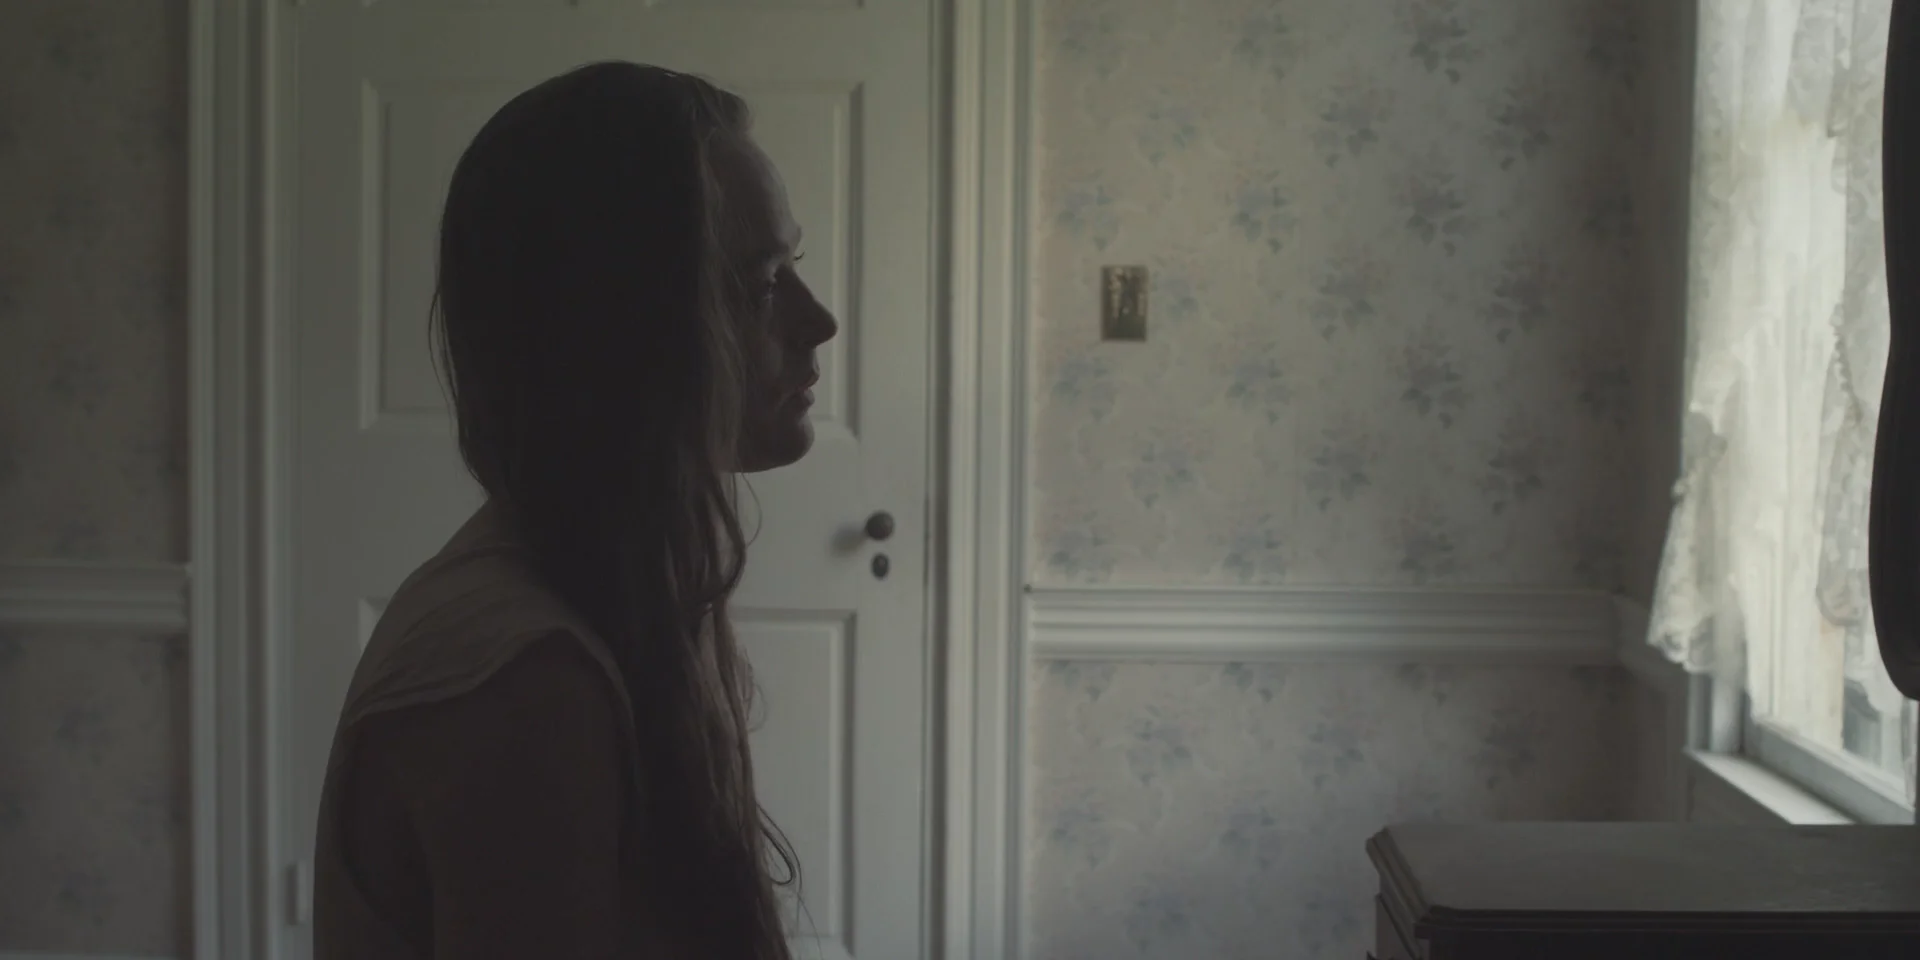 True Love Waits - Trailer on Vimeo